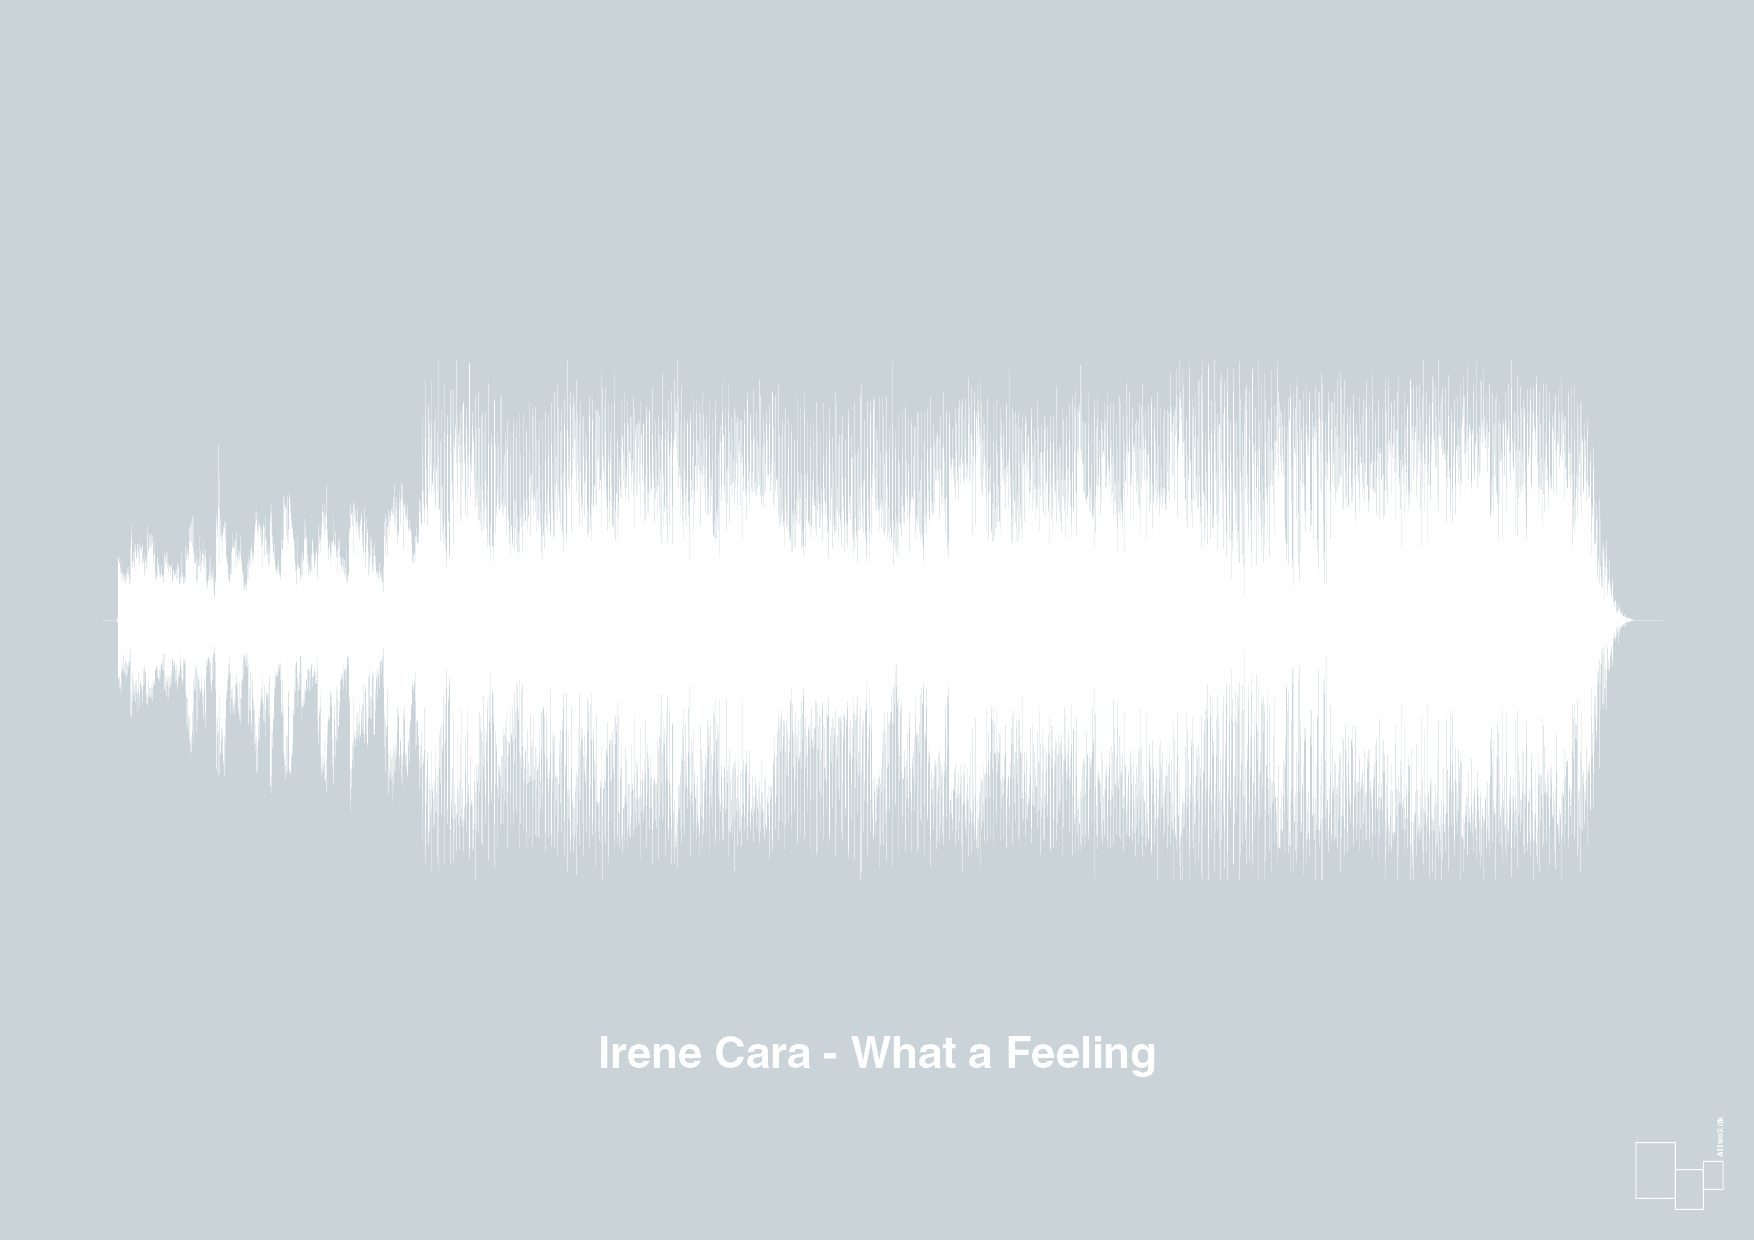 irene cara - what a feeling - Plakat med Musik i Light Drizzle